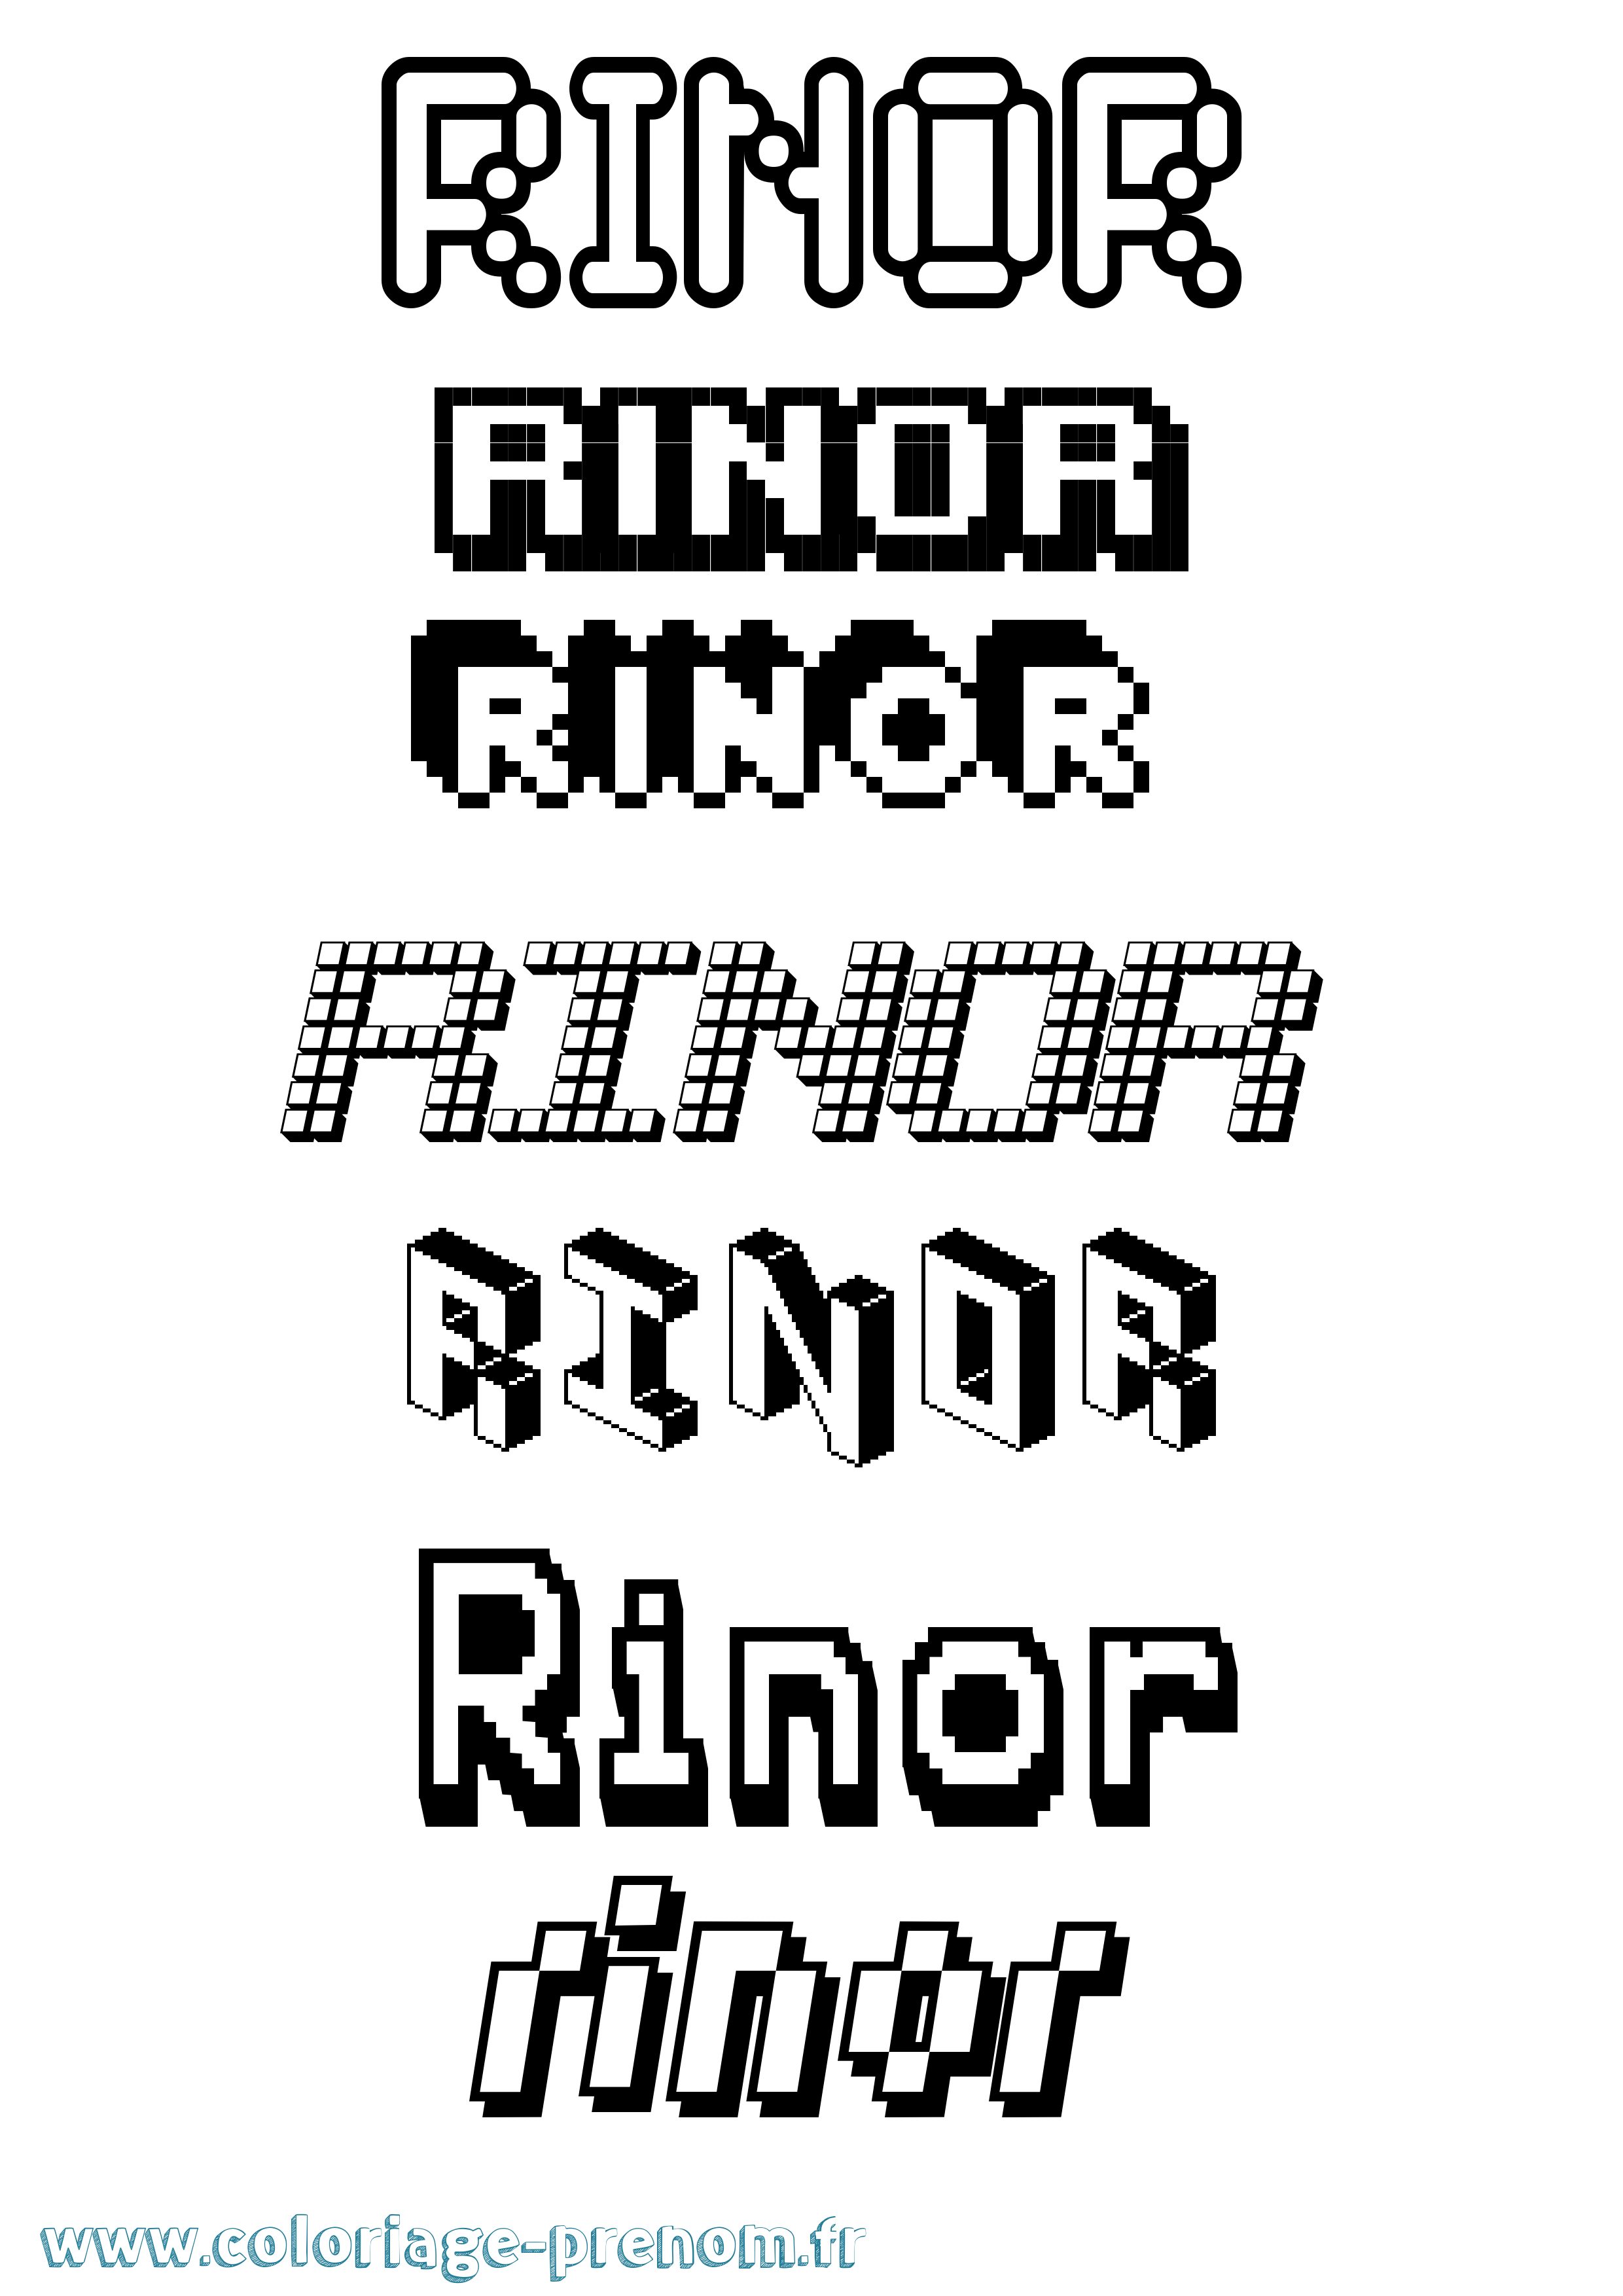 Coloriage prénom Rinor Pixel